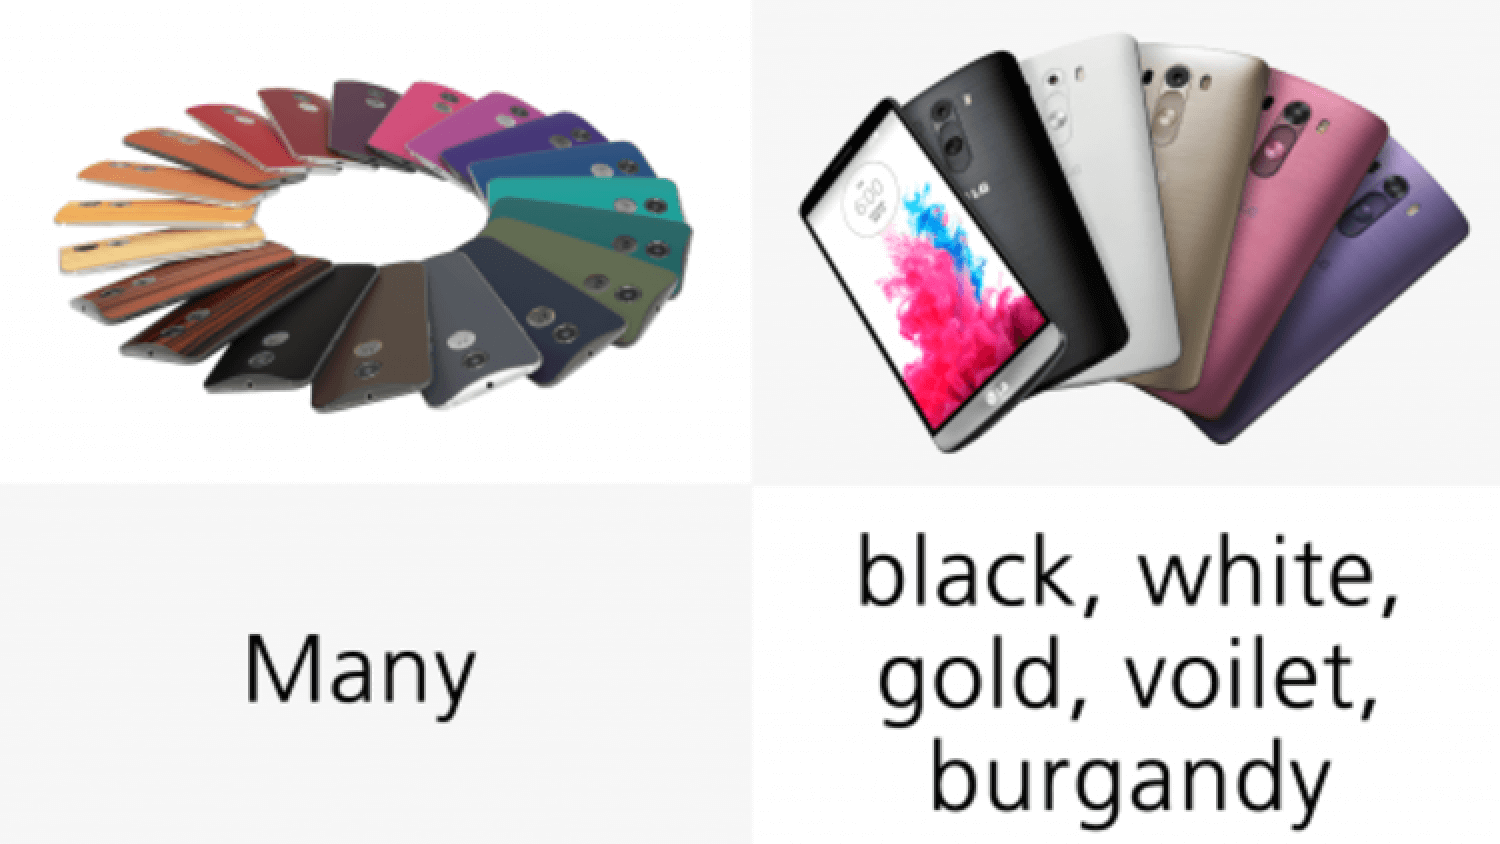 Moto X 2014 или LG G3? Какой из флагманов впереди? Фото.